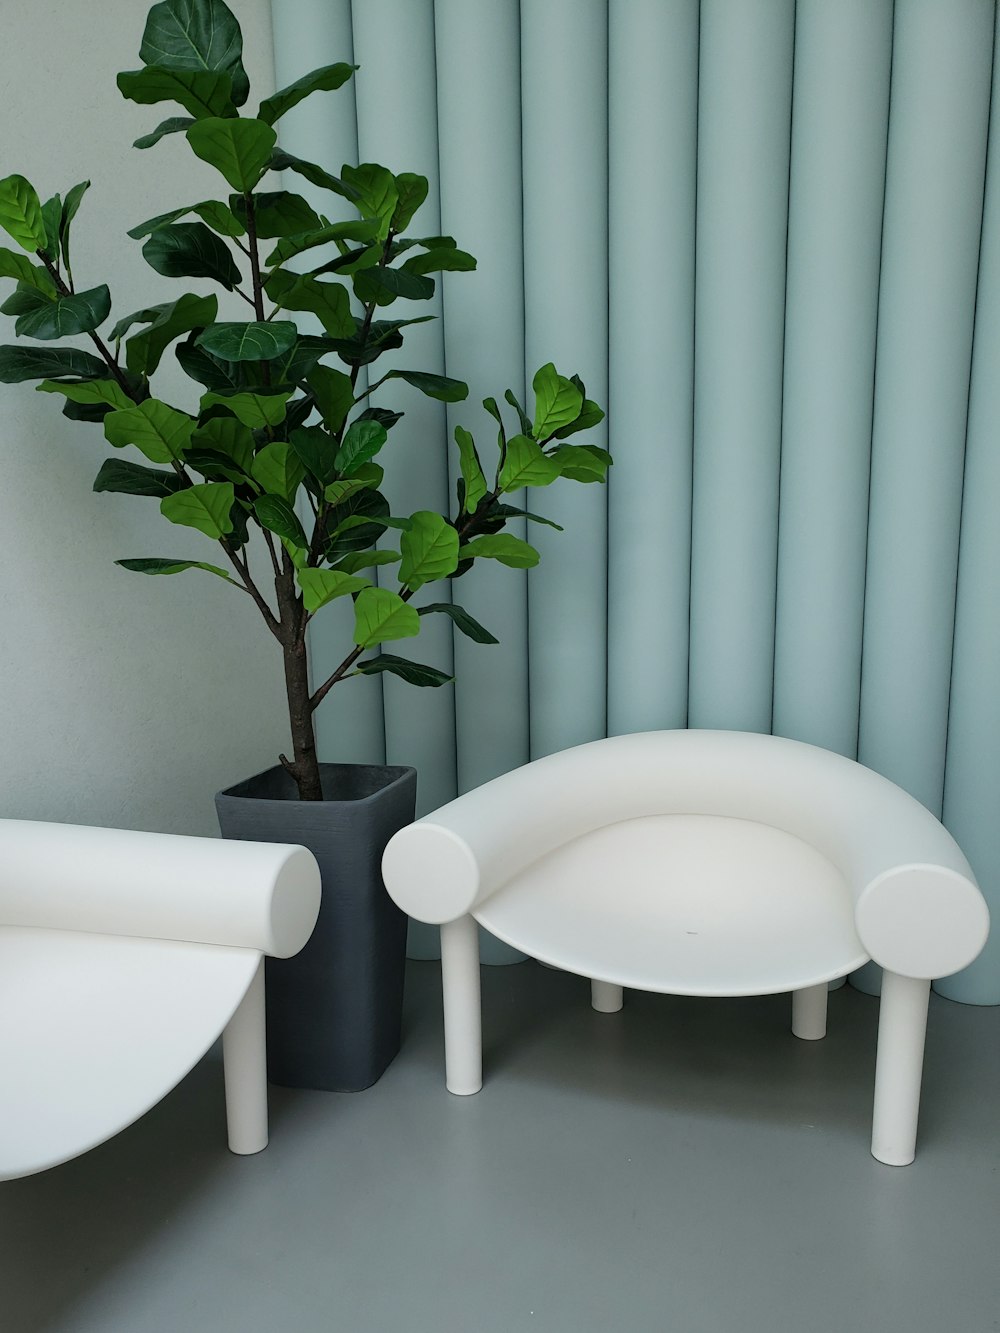 Una planta en una maceta negra junto a una silla blanca